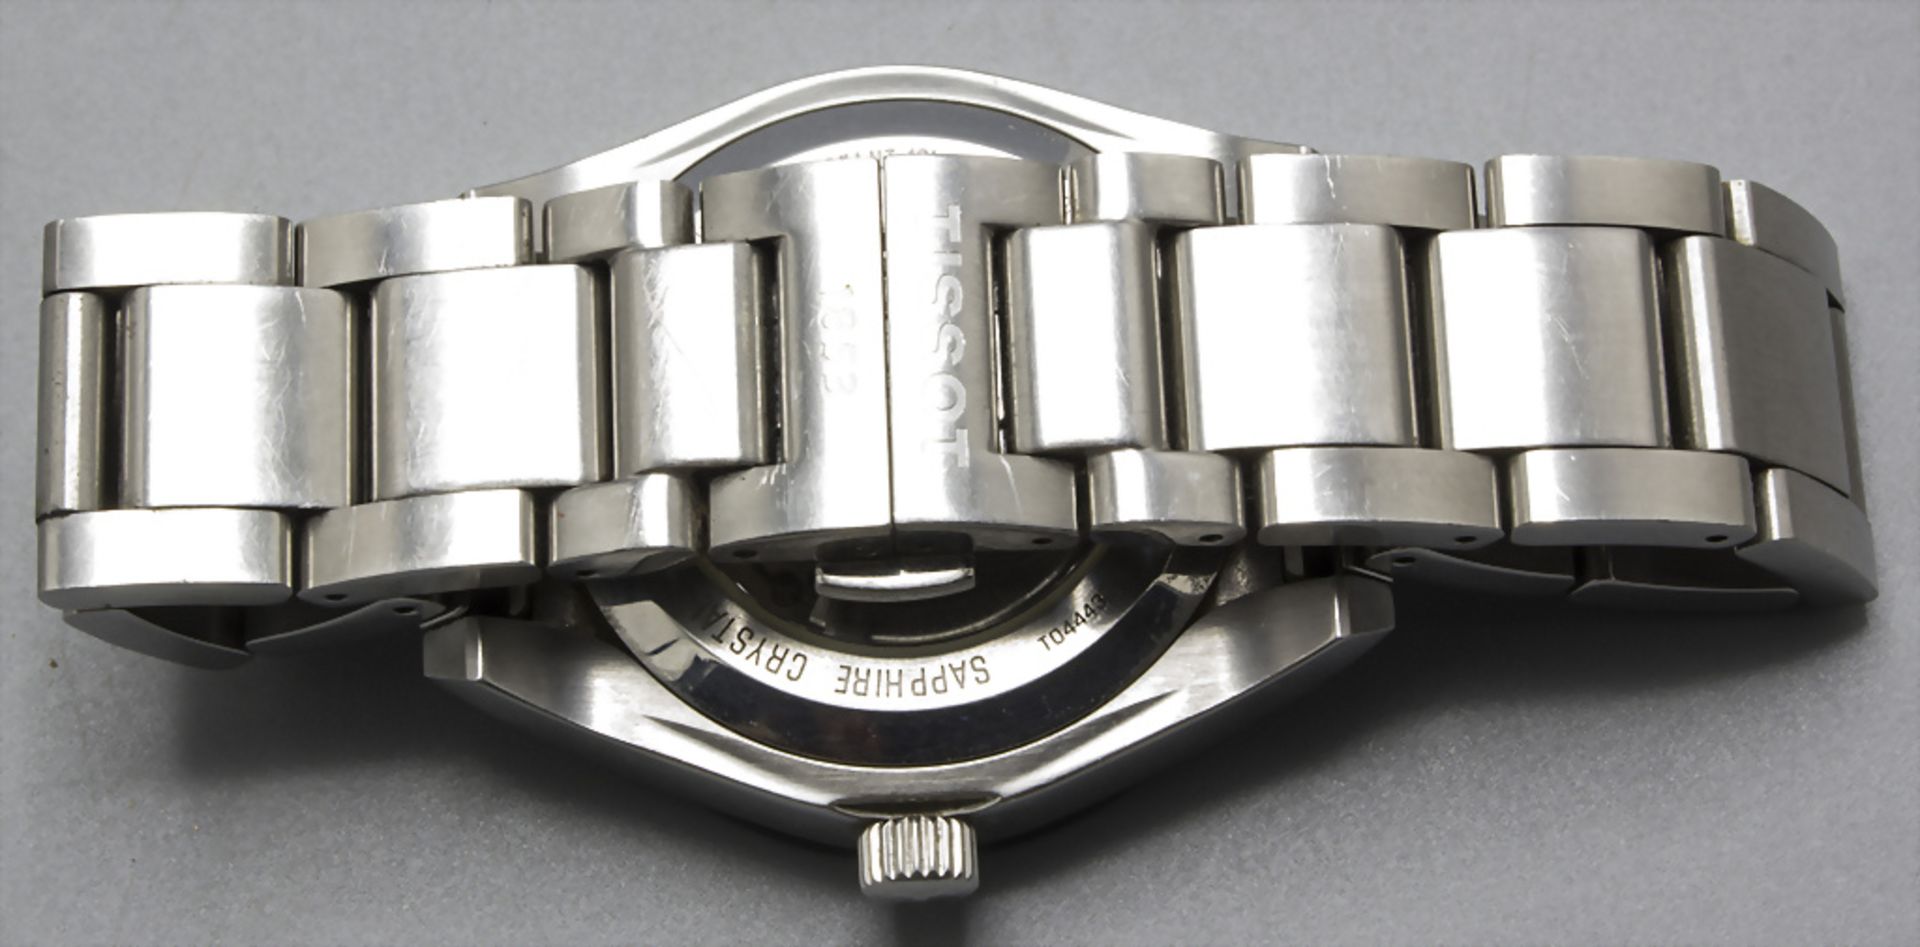 HAU Tissot PRS 516 Automatik / A men's wrist watch, Schweiz / Swiss um 2000 - Image 4 of 6